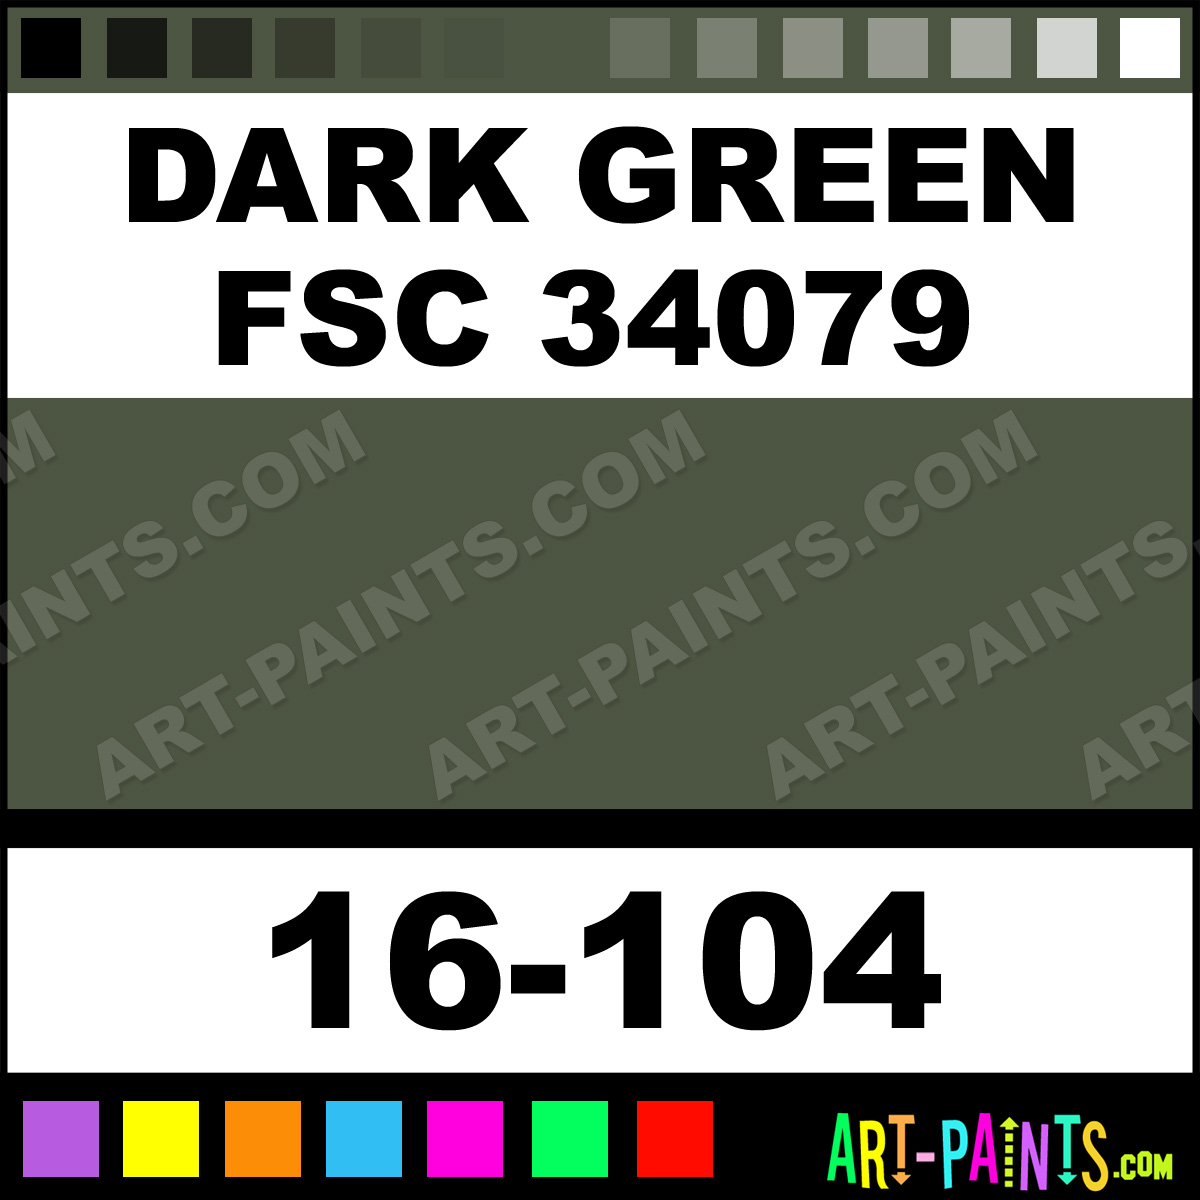 Dark-Green-FSC-34079-lg.jpg